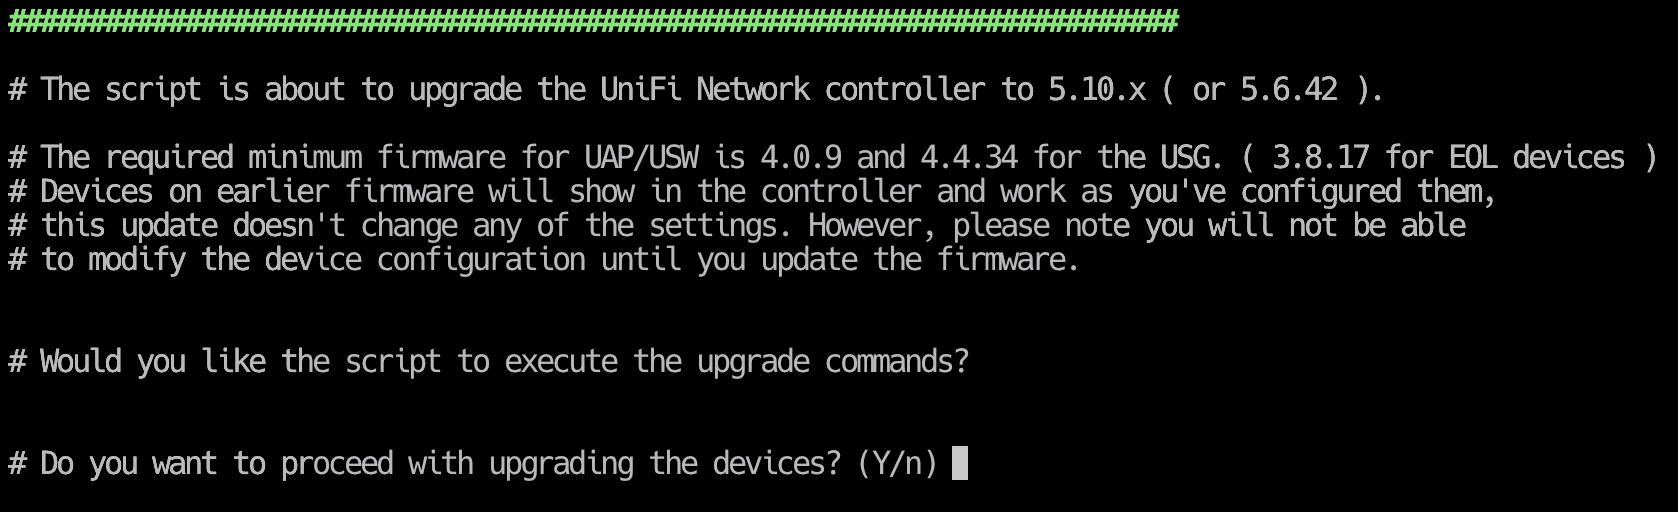 UniFi Controller Upgrade - Firmware Warning